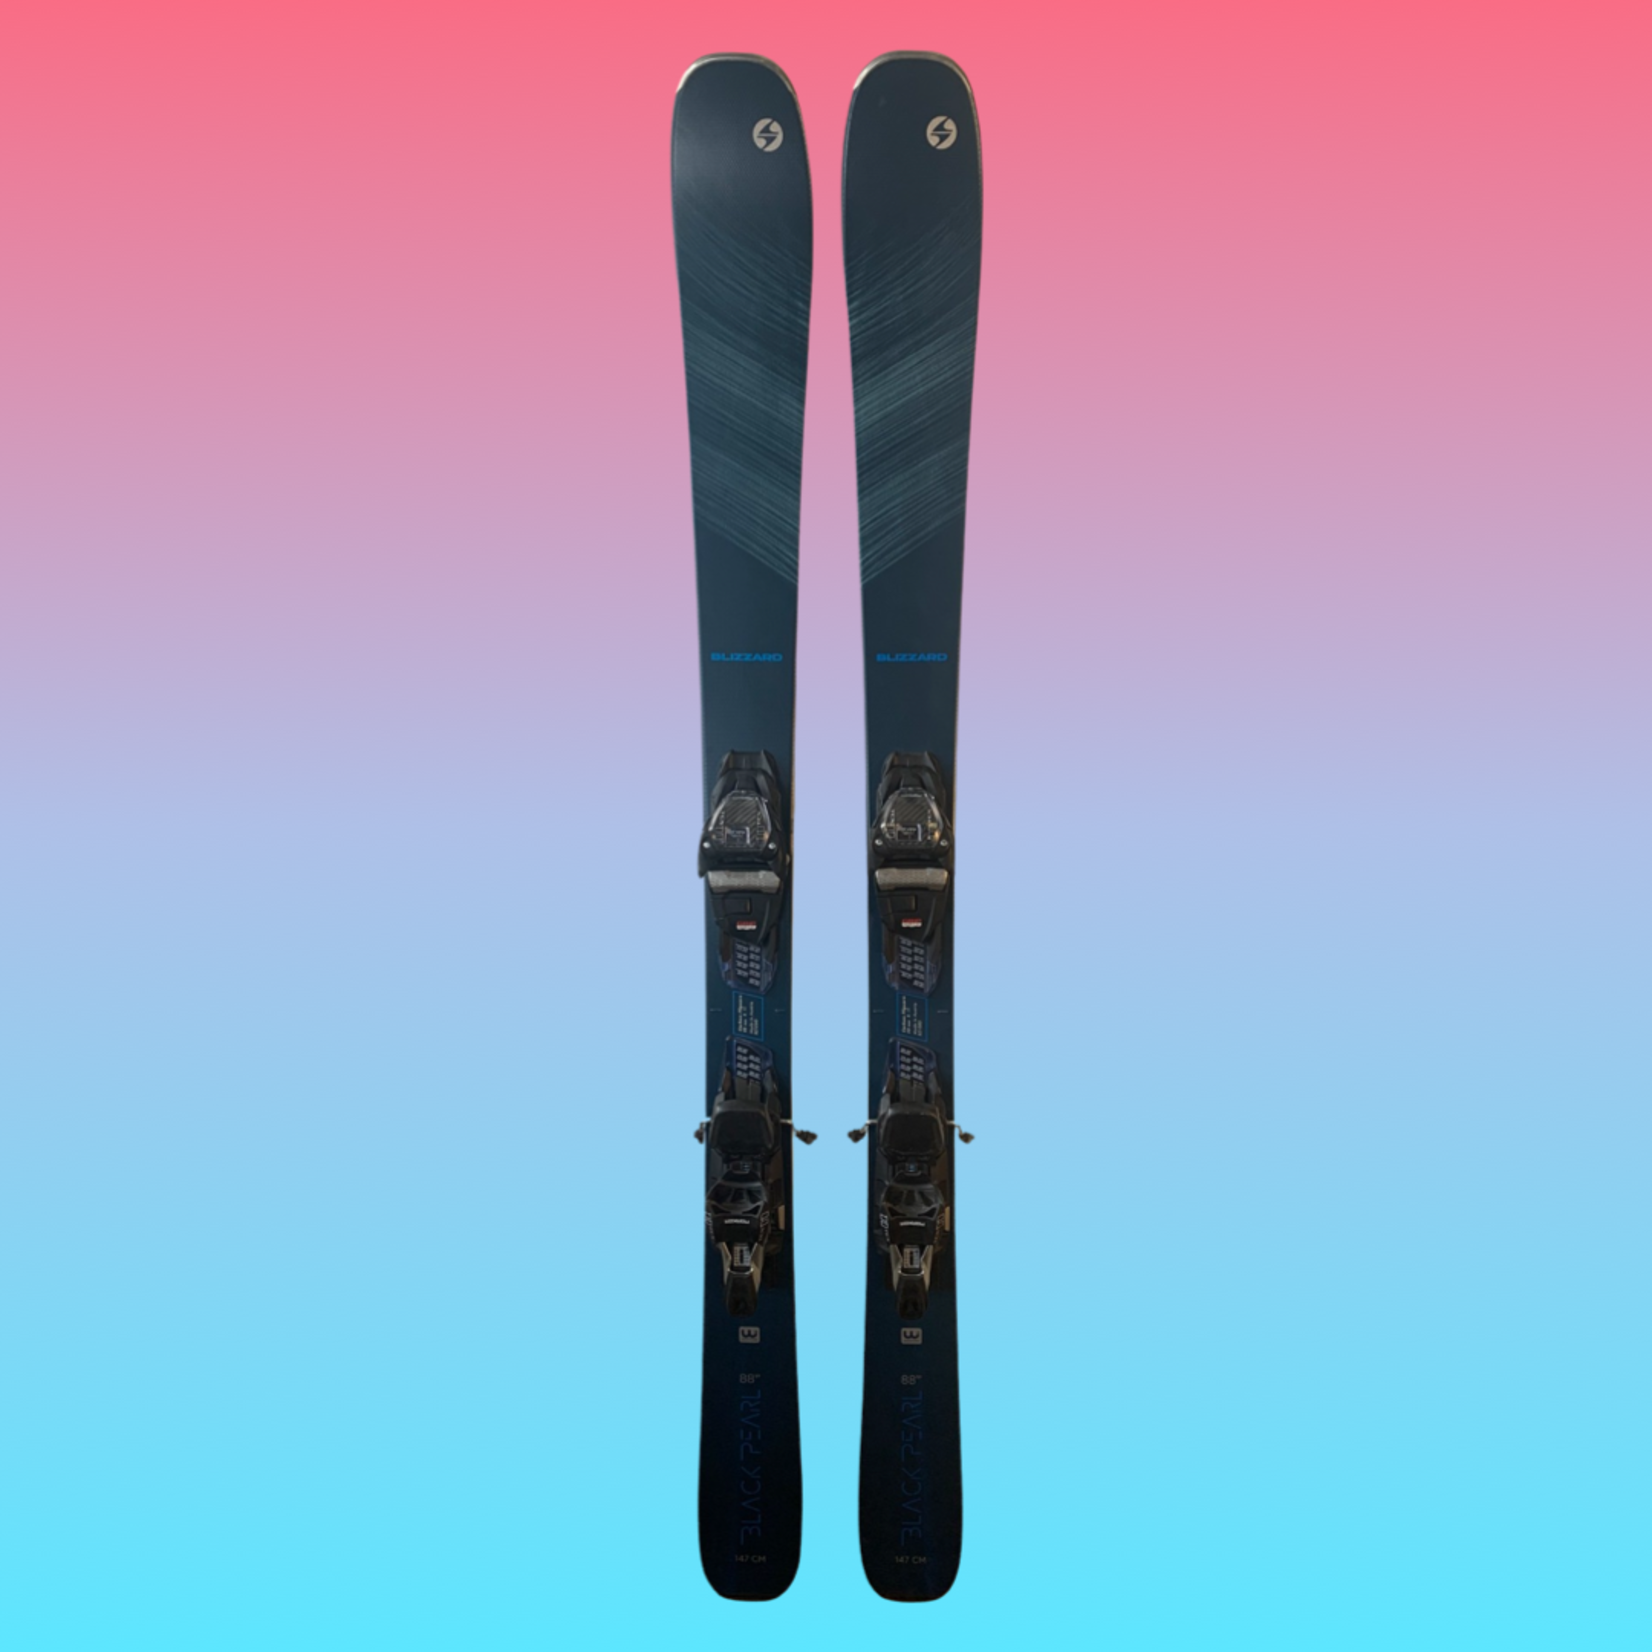 Blizzard NEW 2022 Blizzard Black Pearl Skis, Size 147 cm